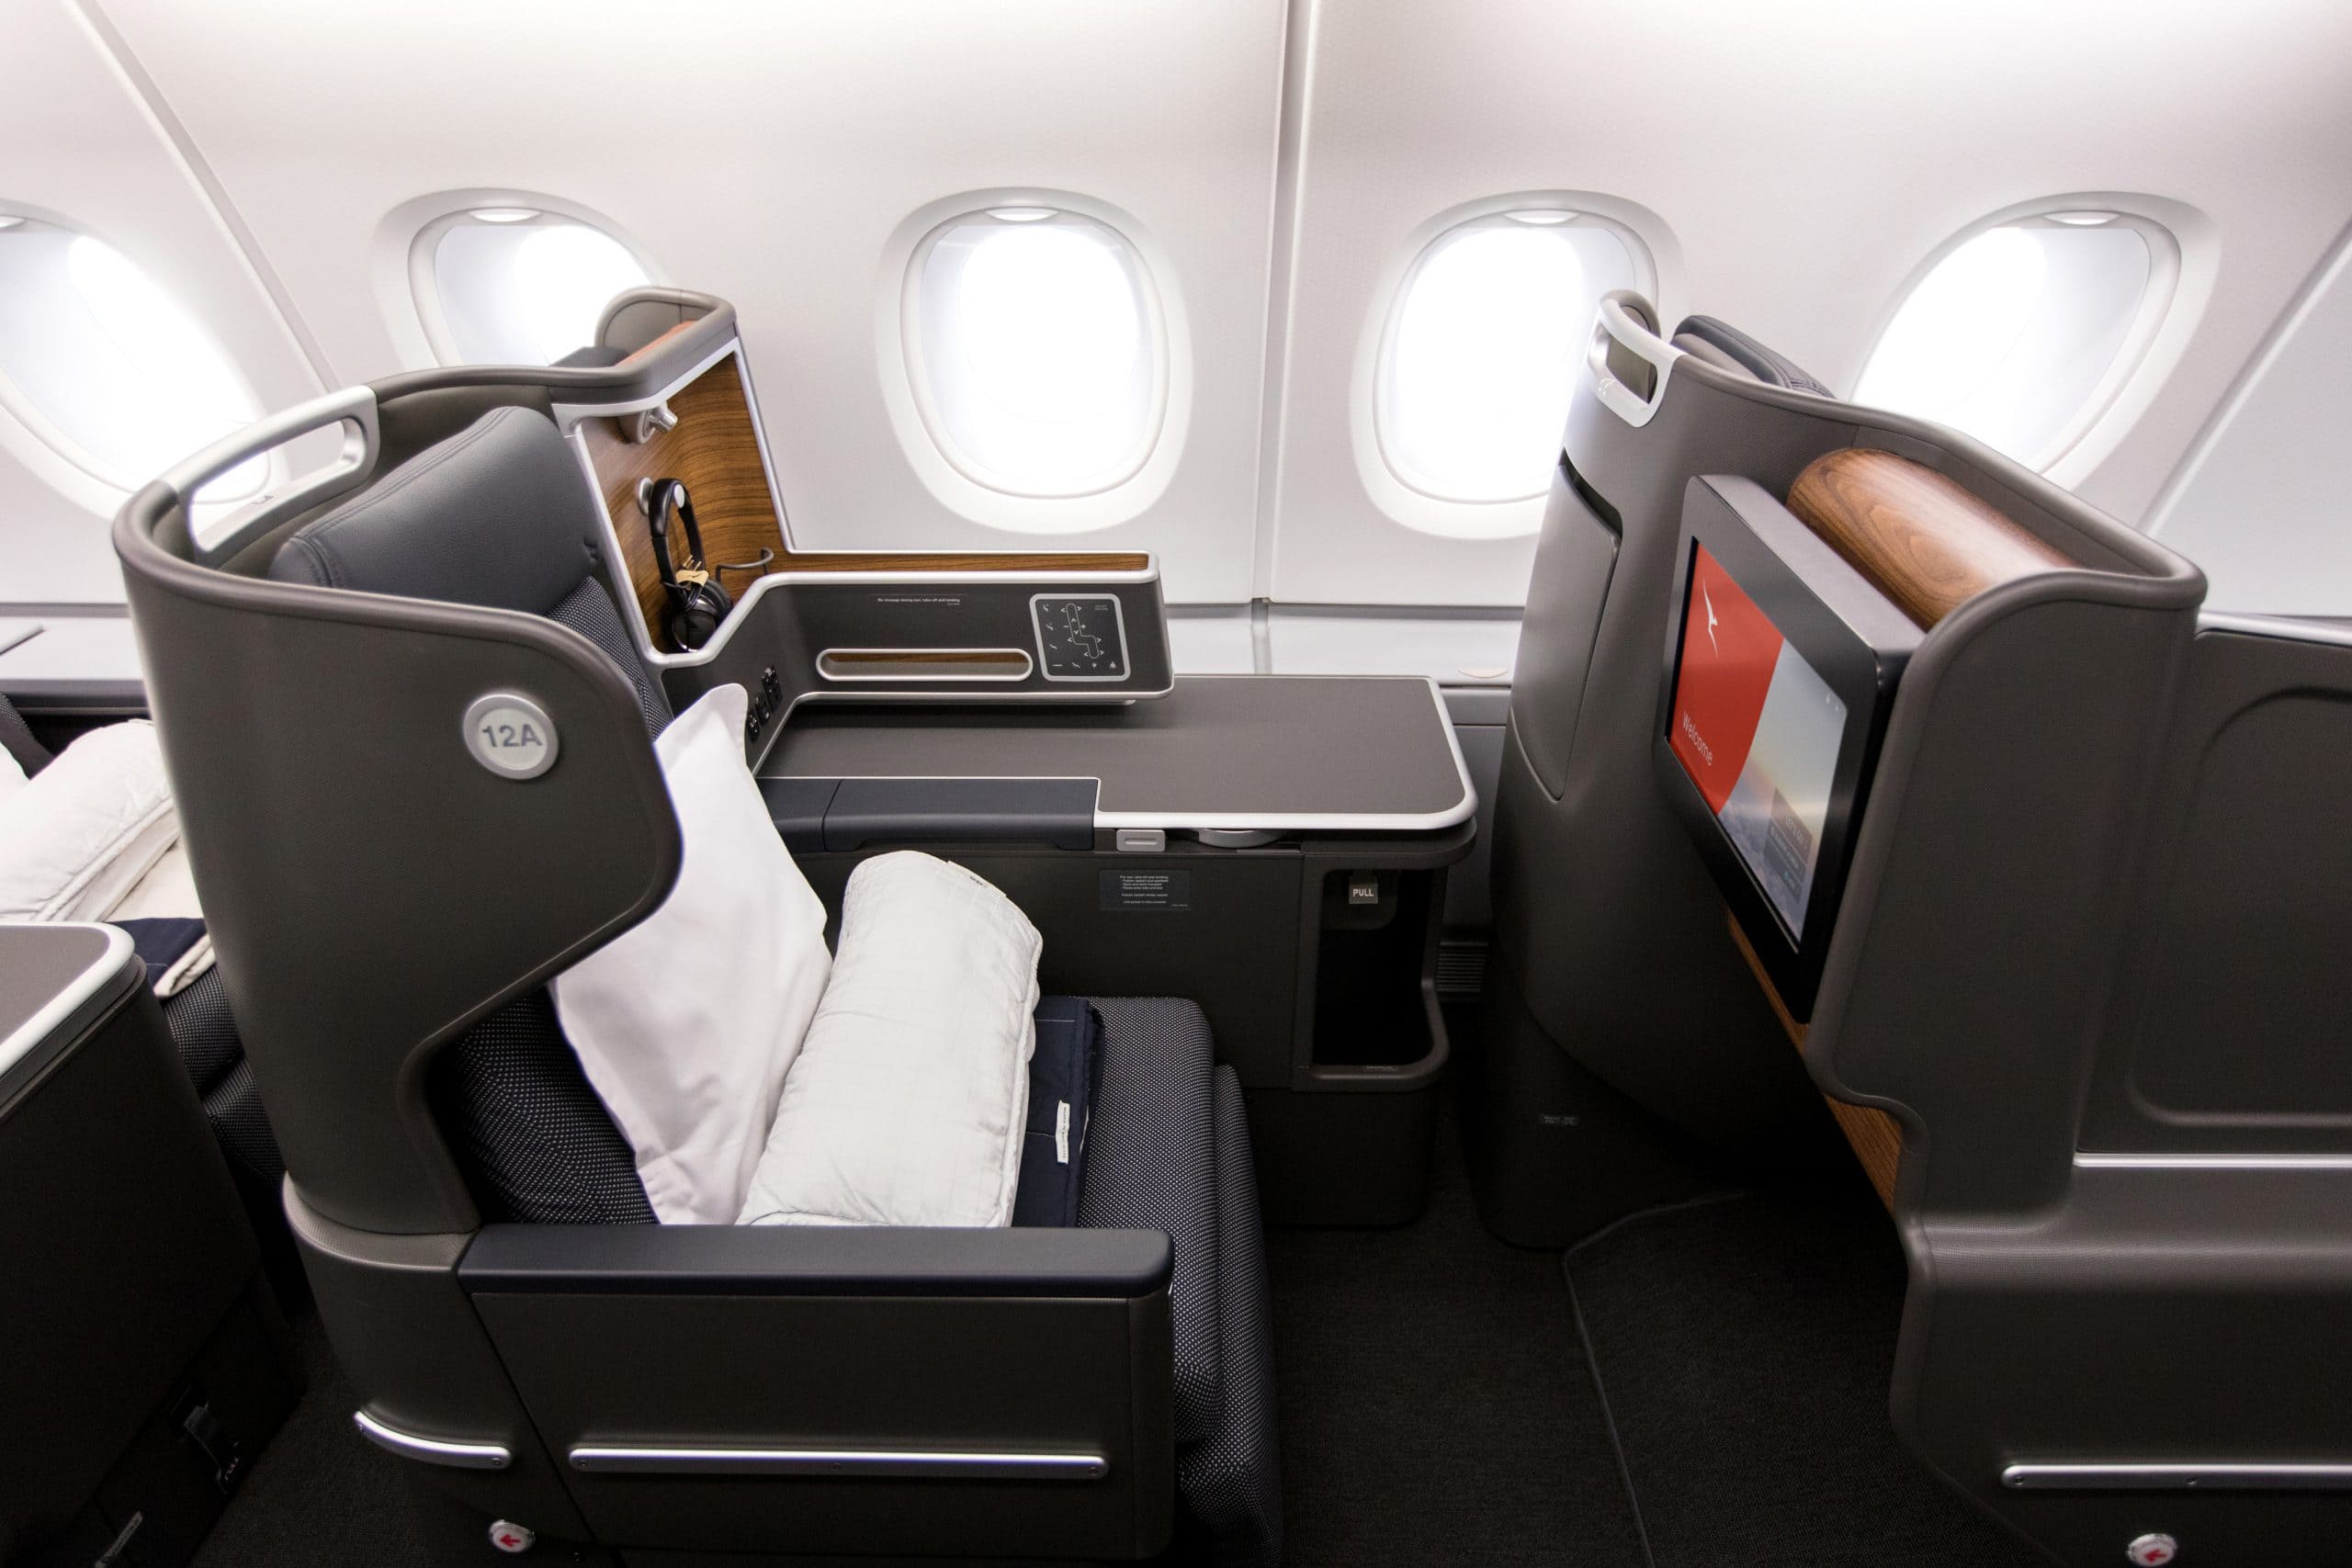 Qantas A380 Business